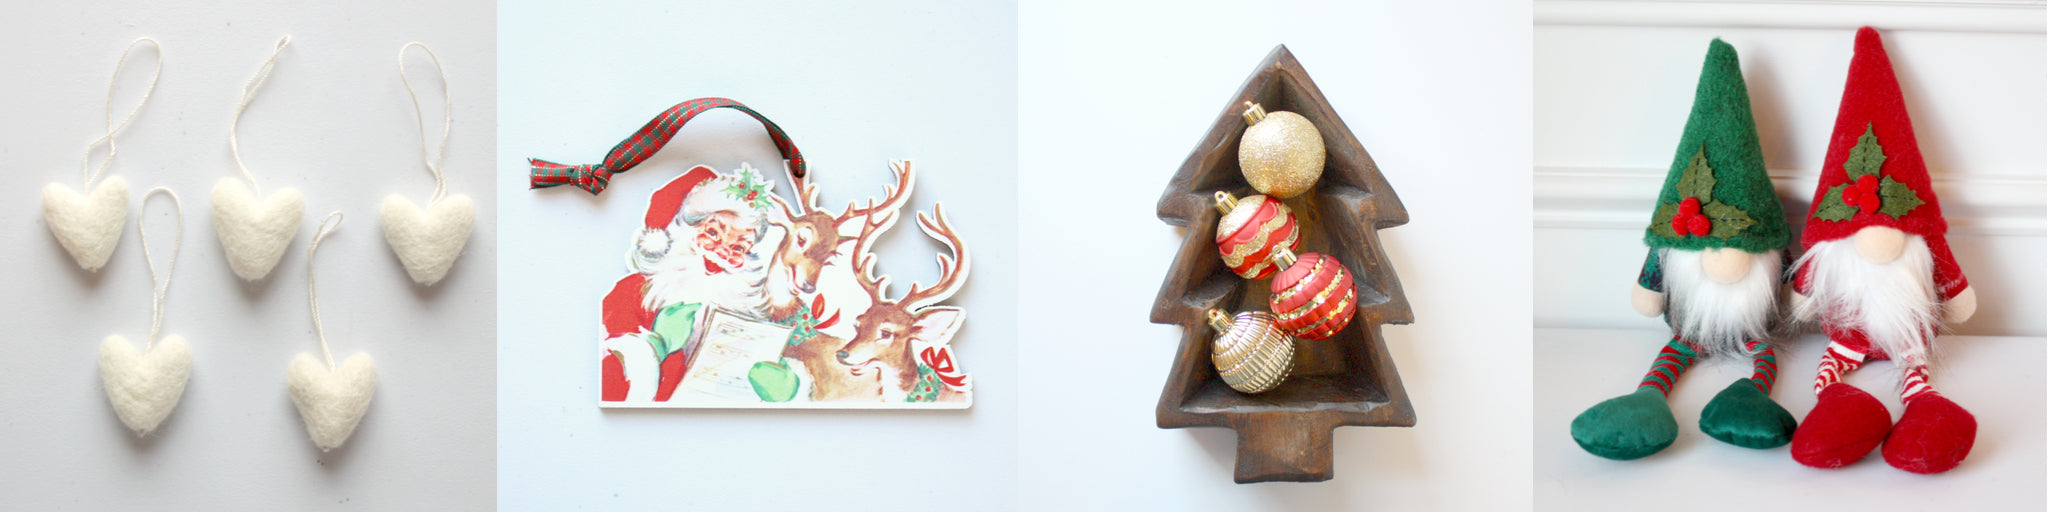 Christmas decor, felted heart ornaments, Santa and reindeer, Christmas gnomes.